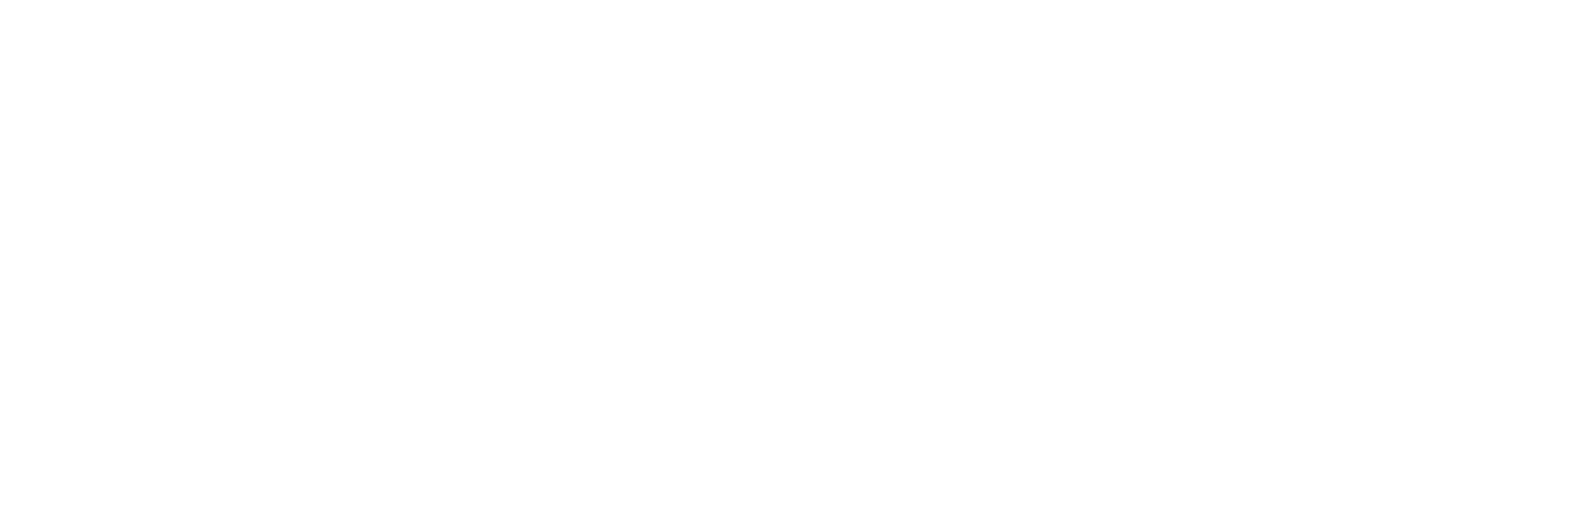 Jubilee Metals Group logo large for dark backgrounds (transparent PNG)